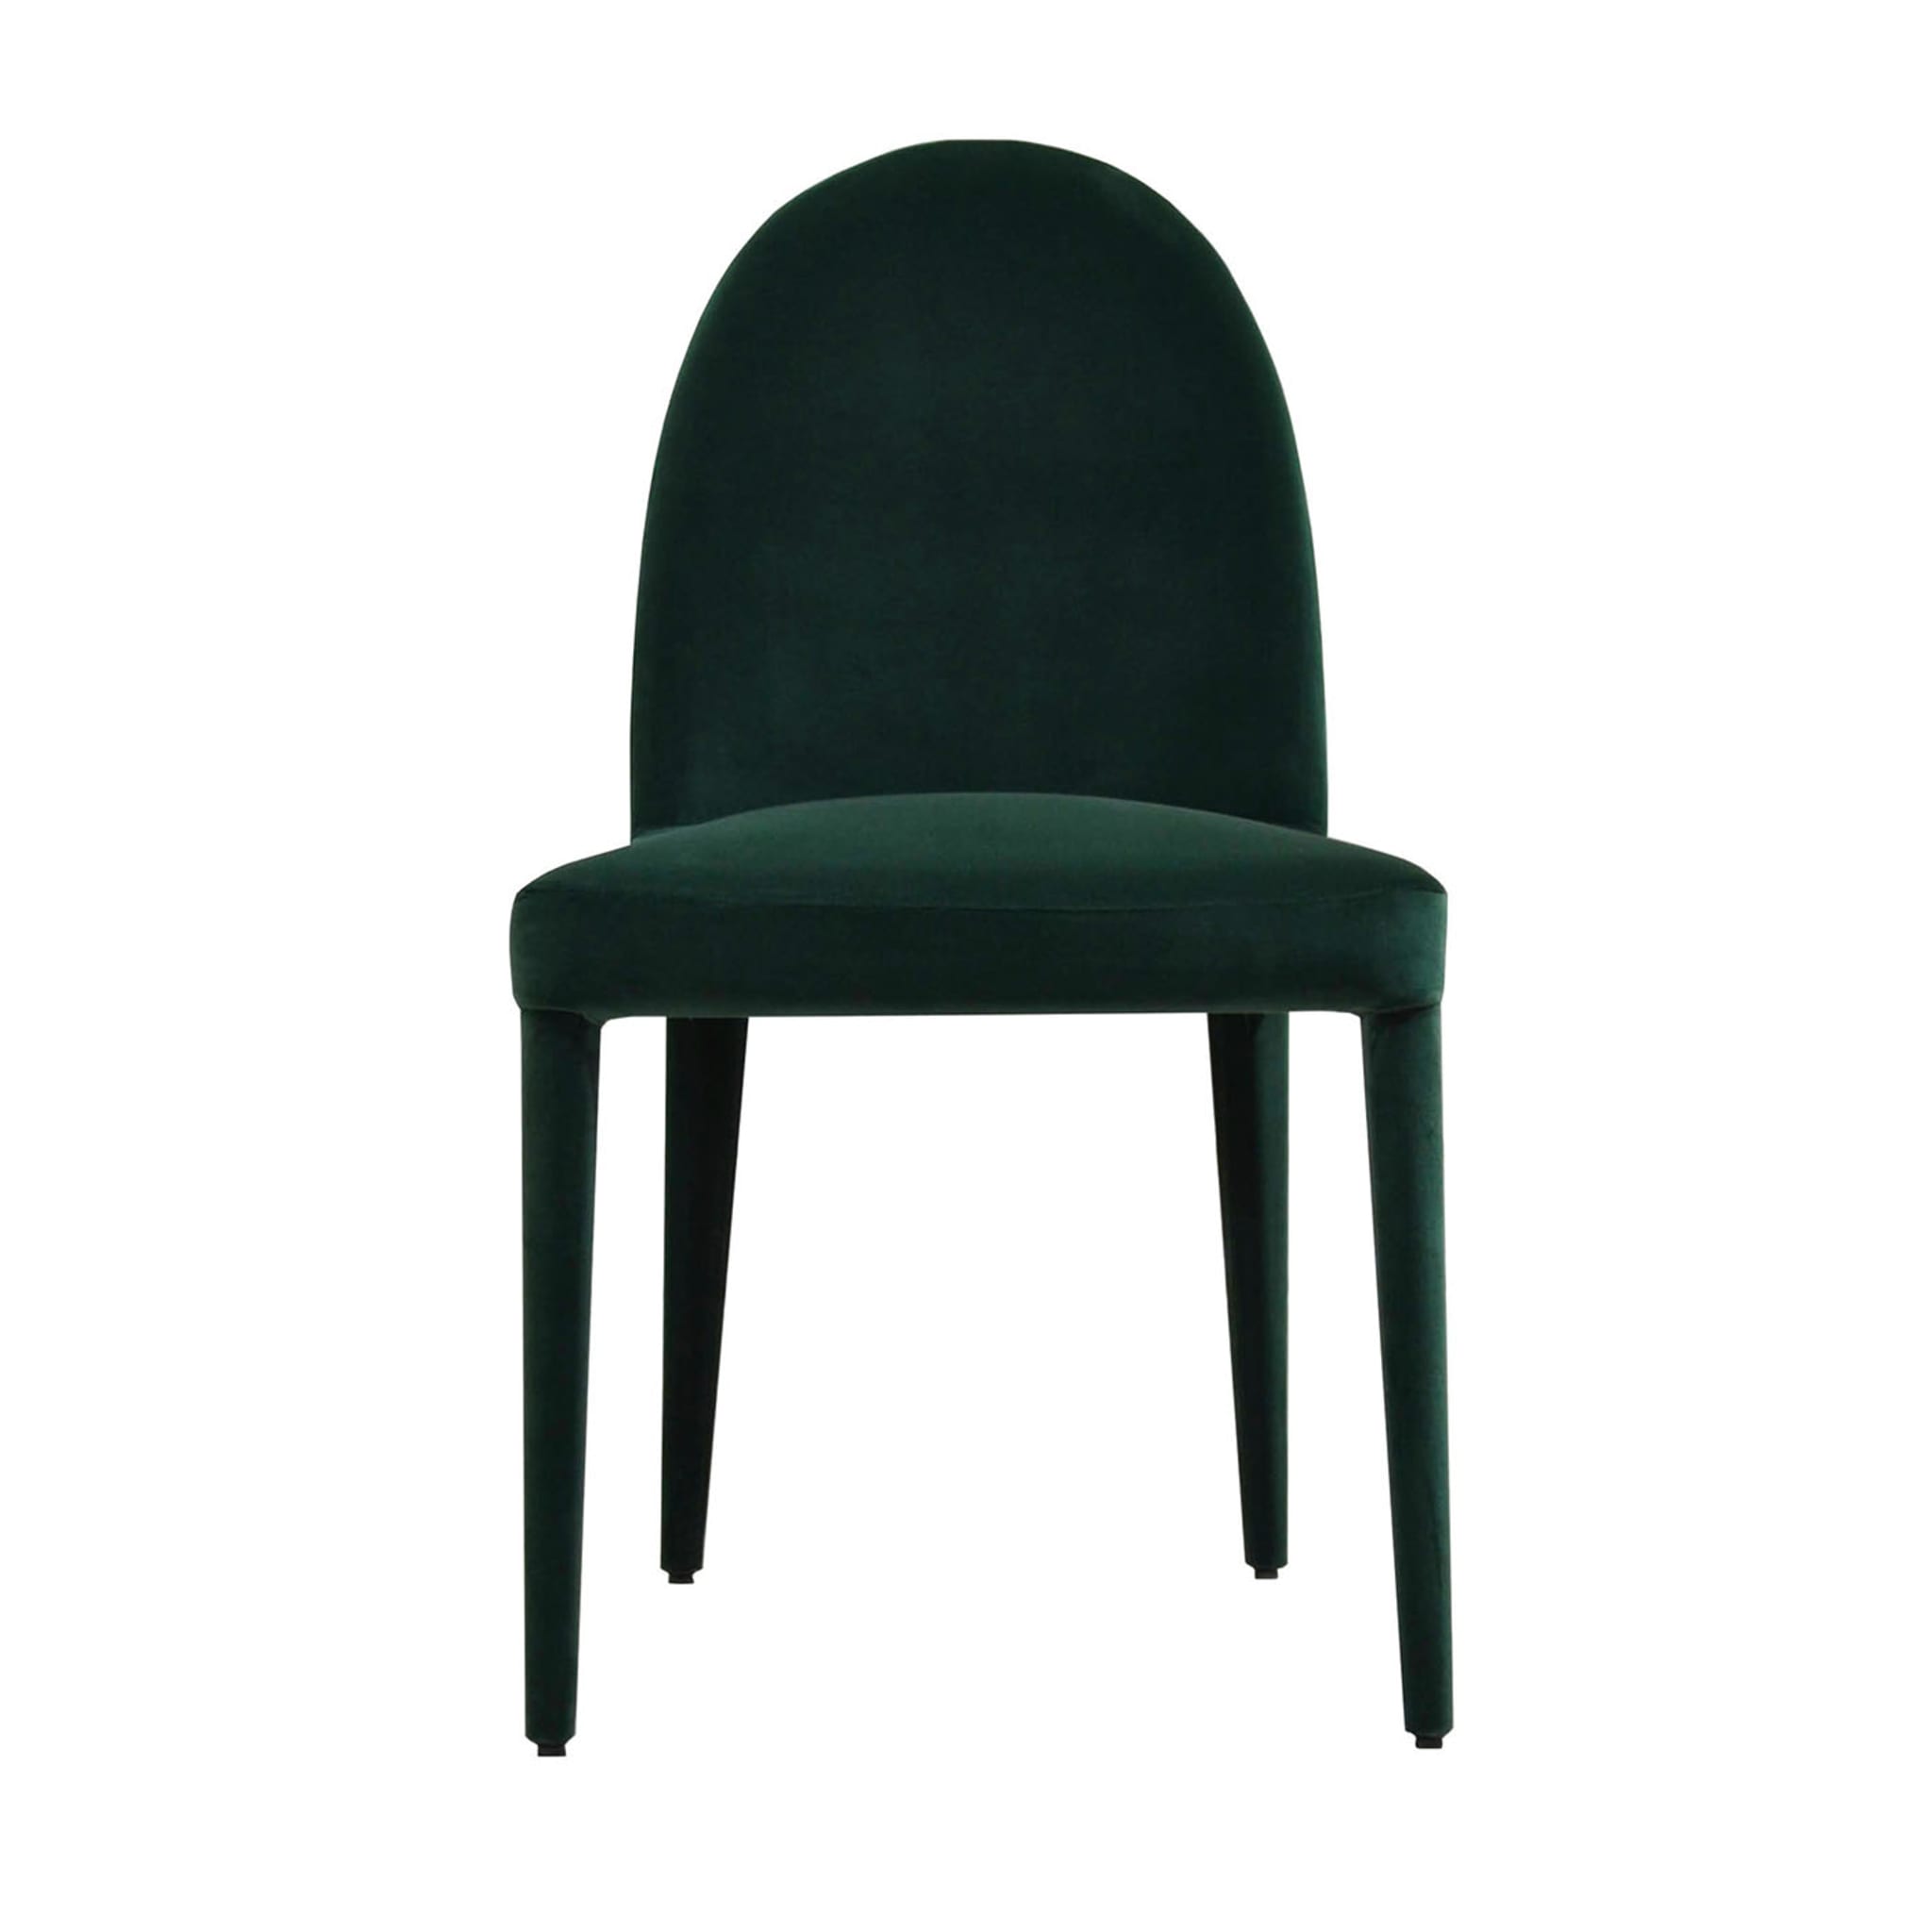 Balzaretti XL Dining Chair in Green Velvet - Main view